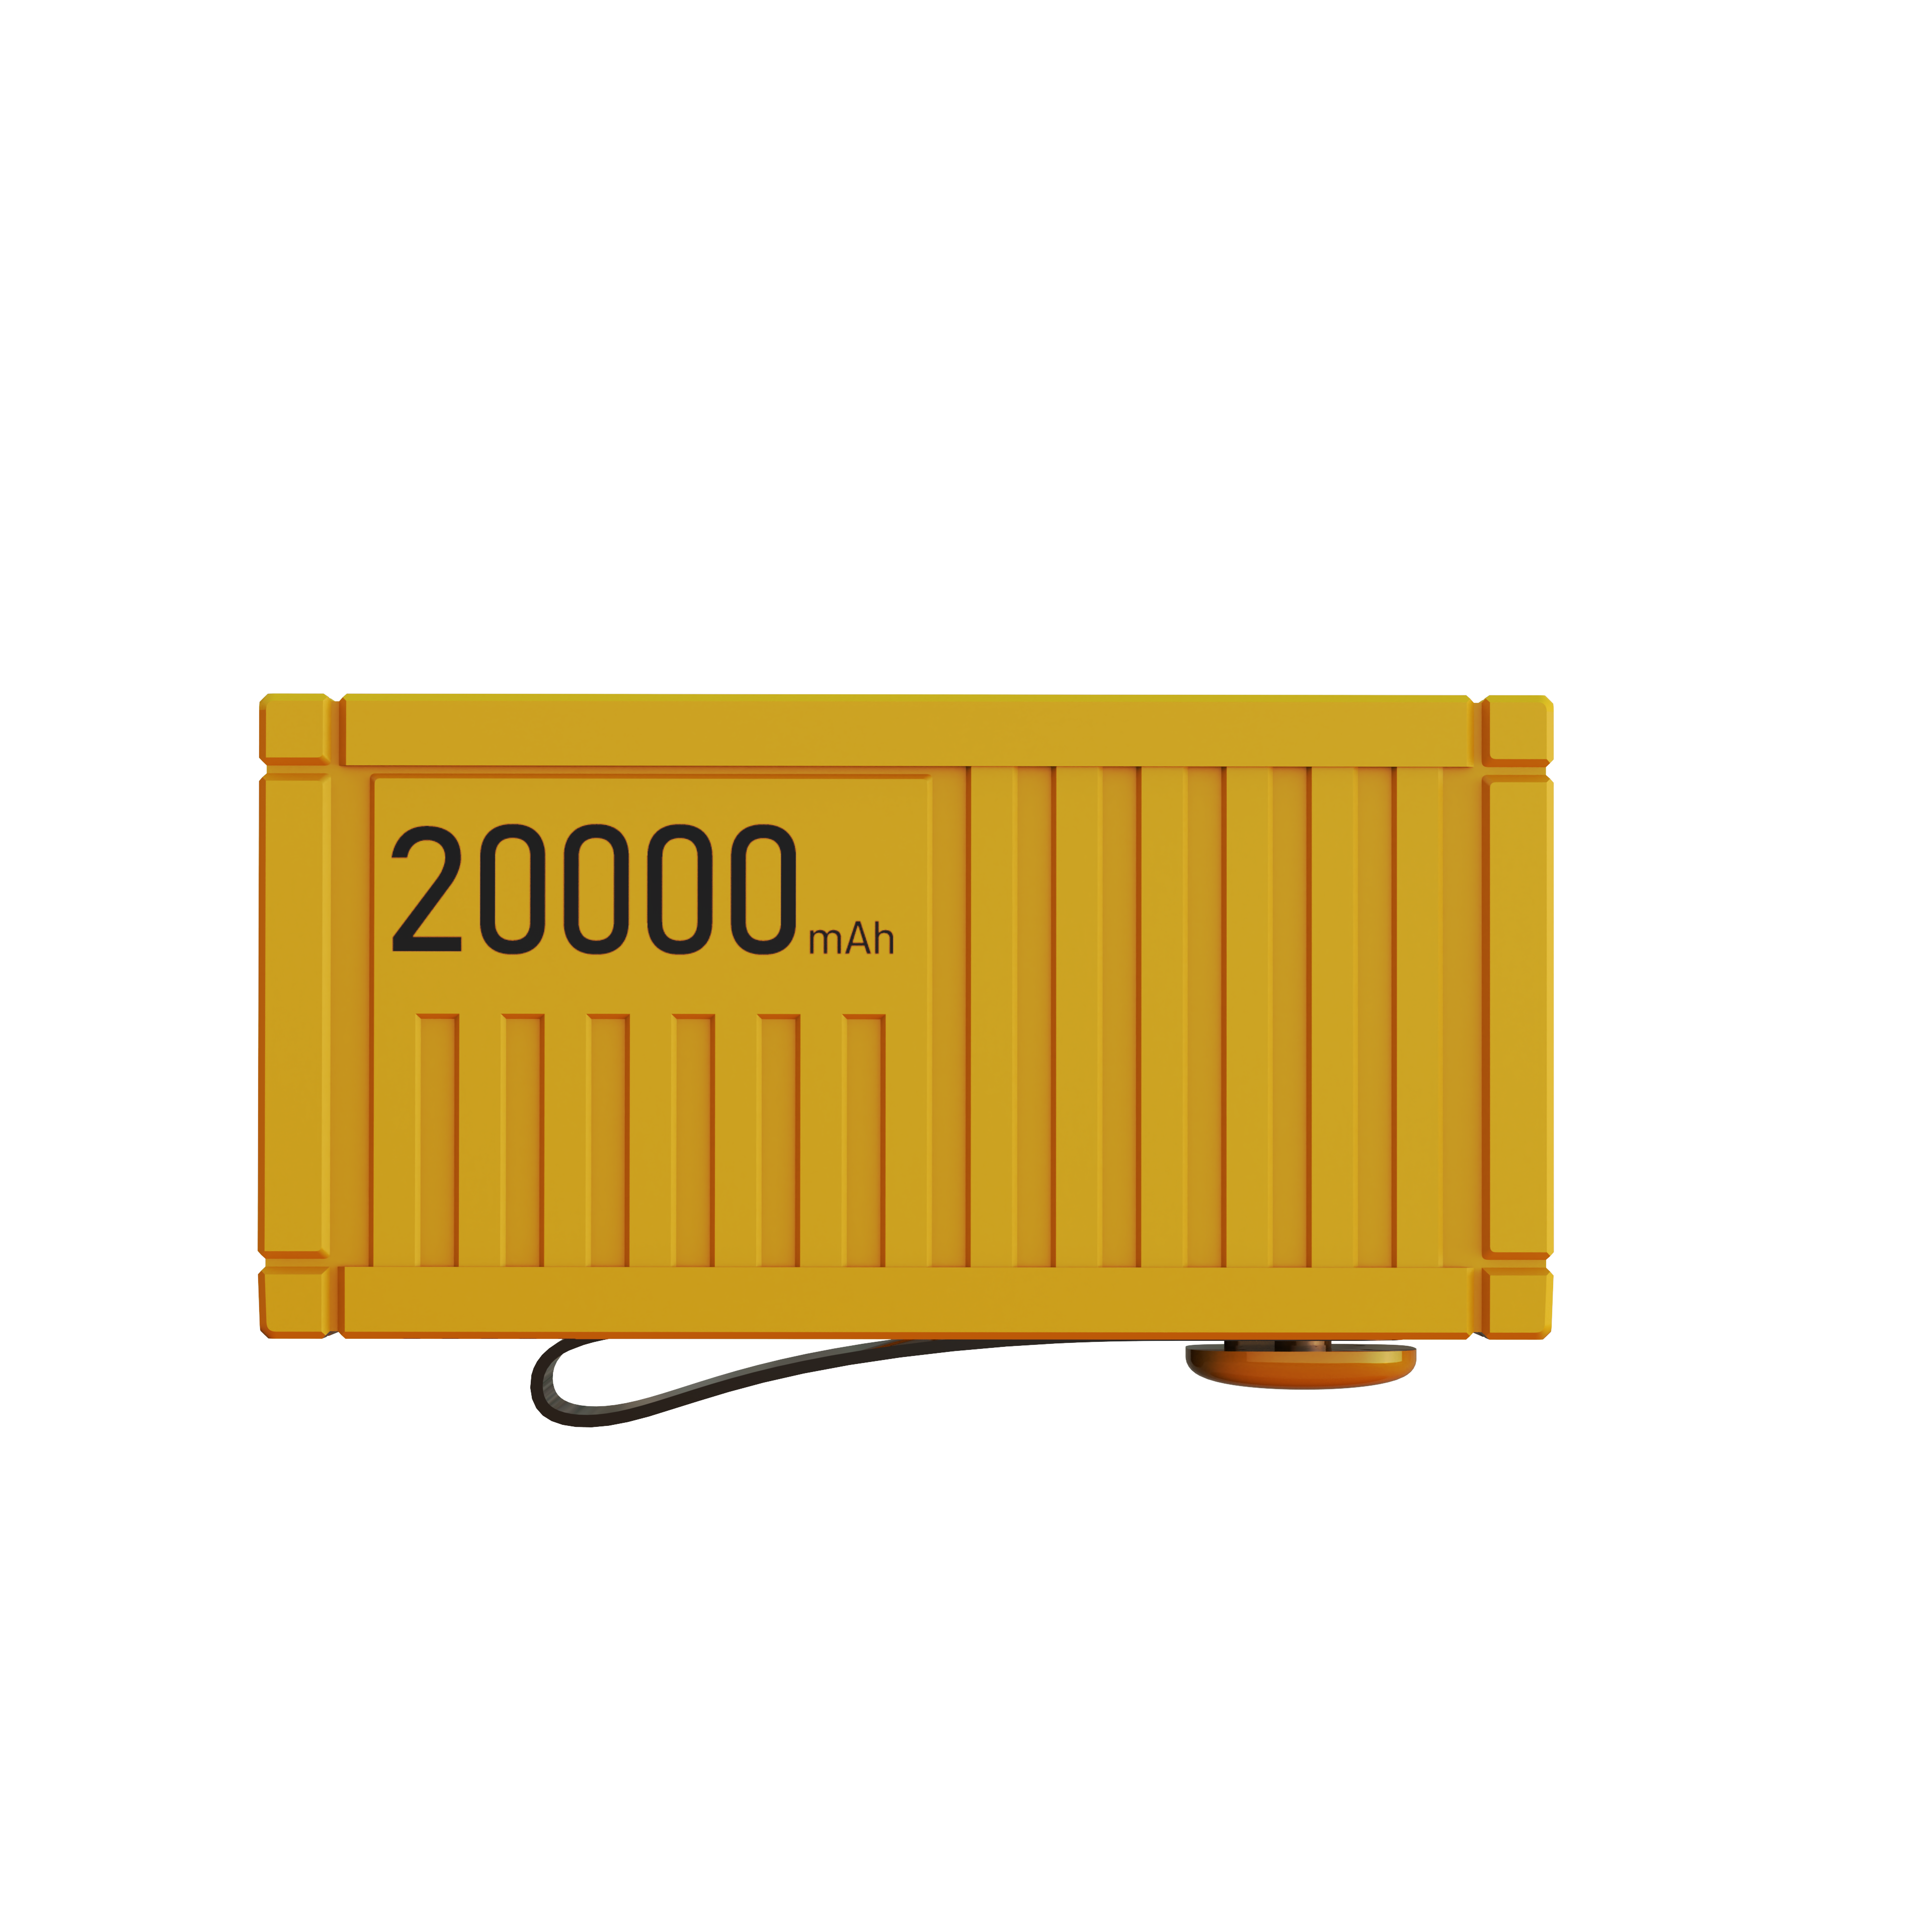 Yam Power Bank 20.000 mAh Yellow